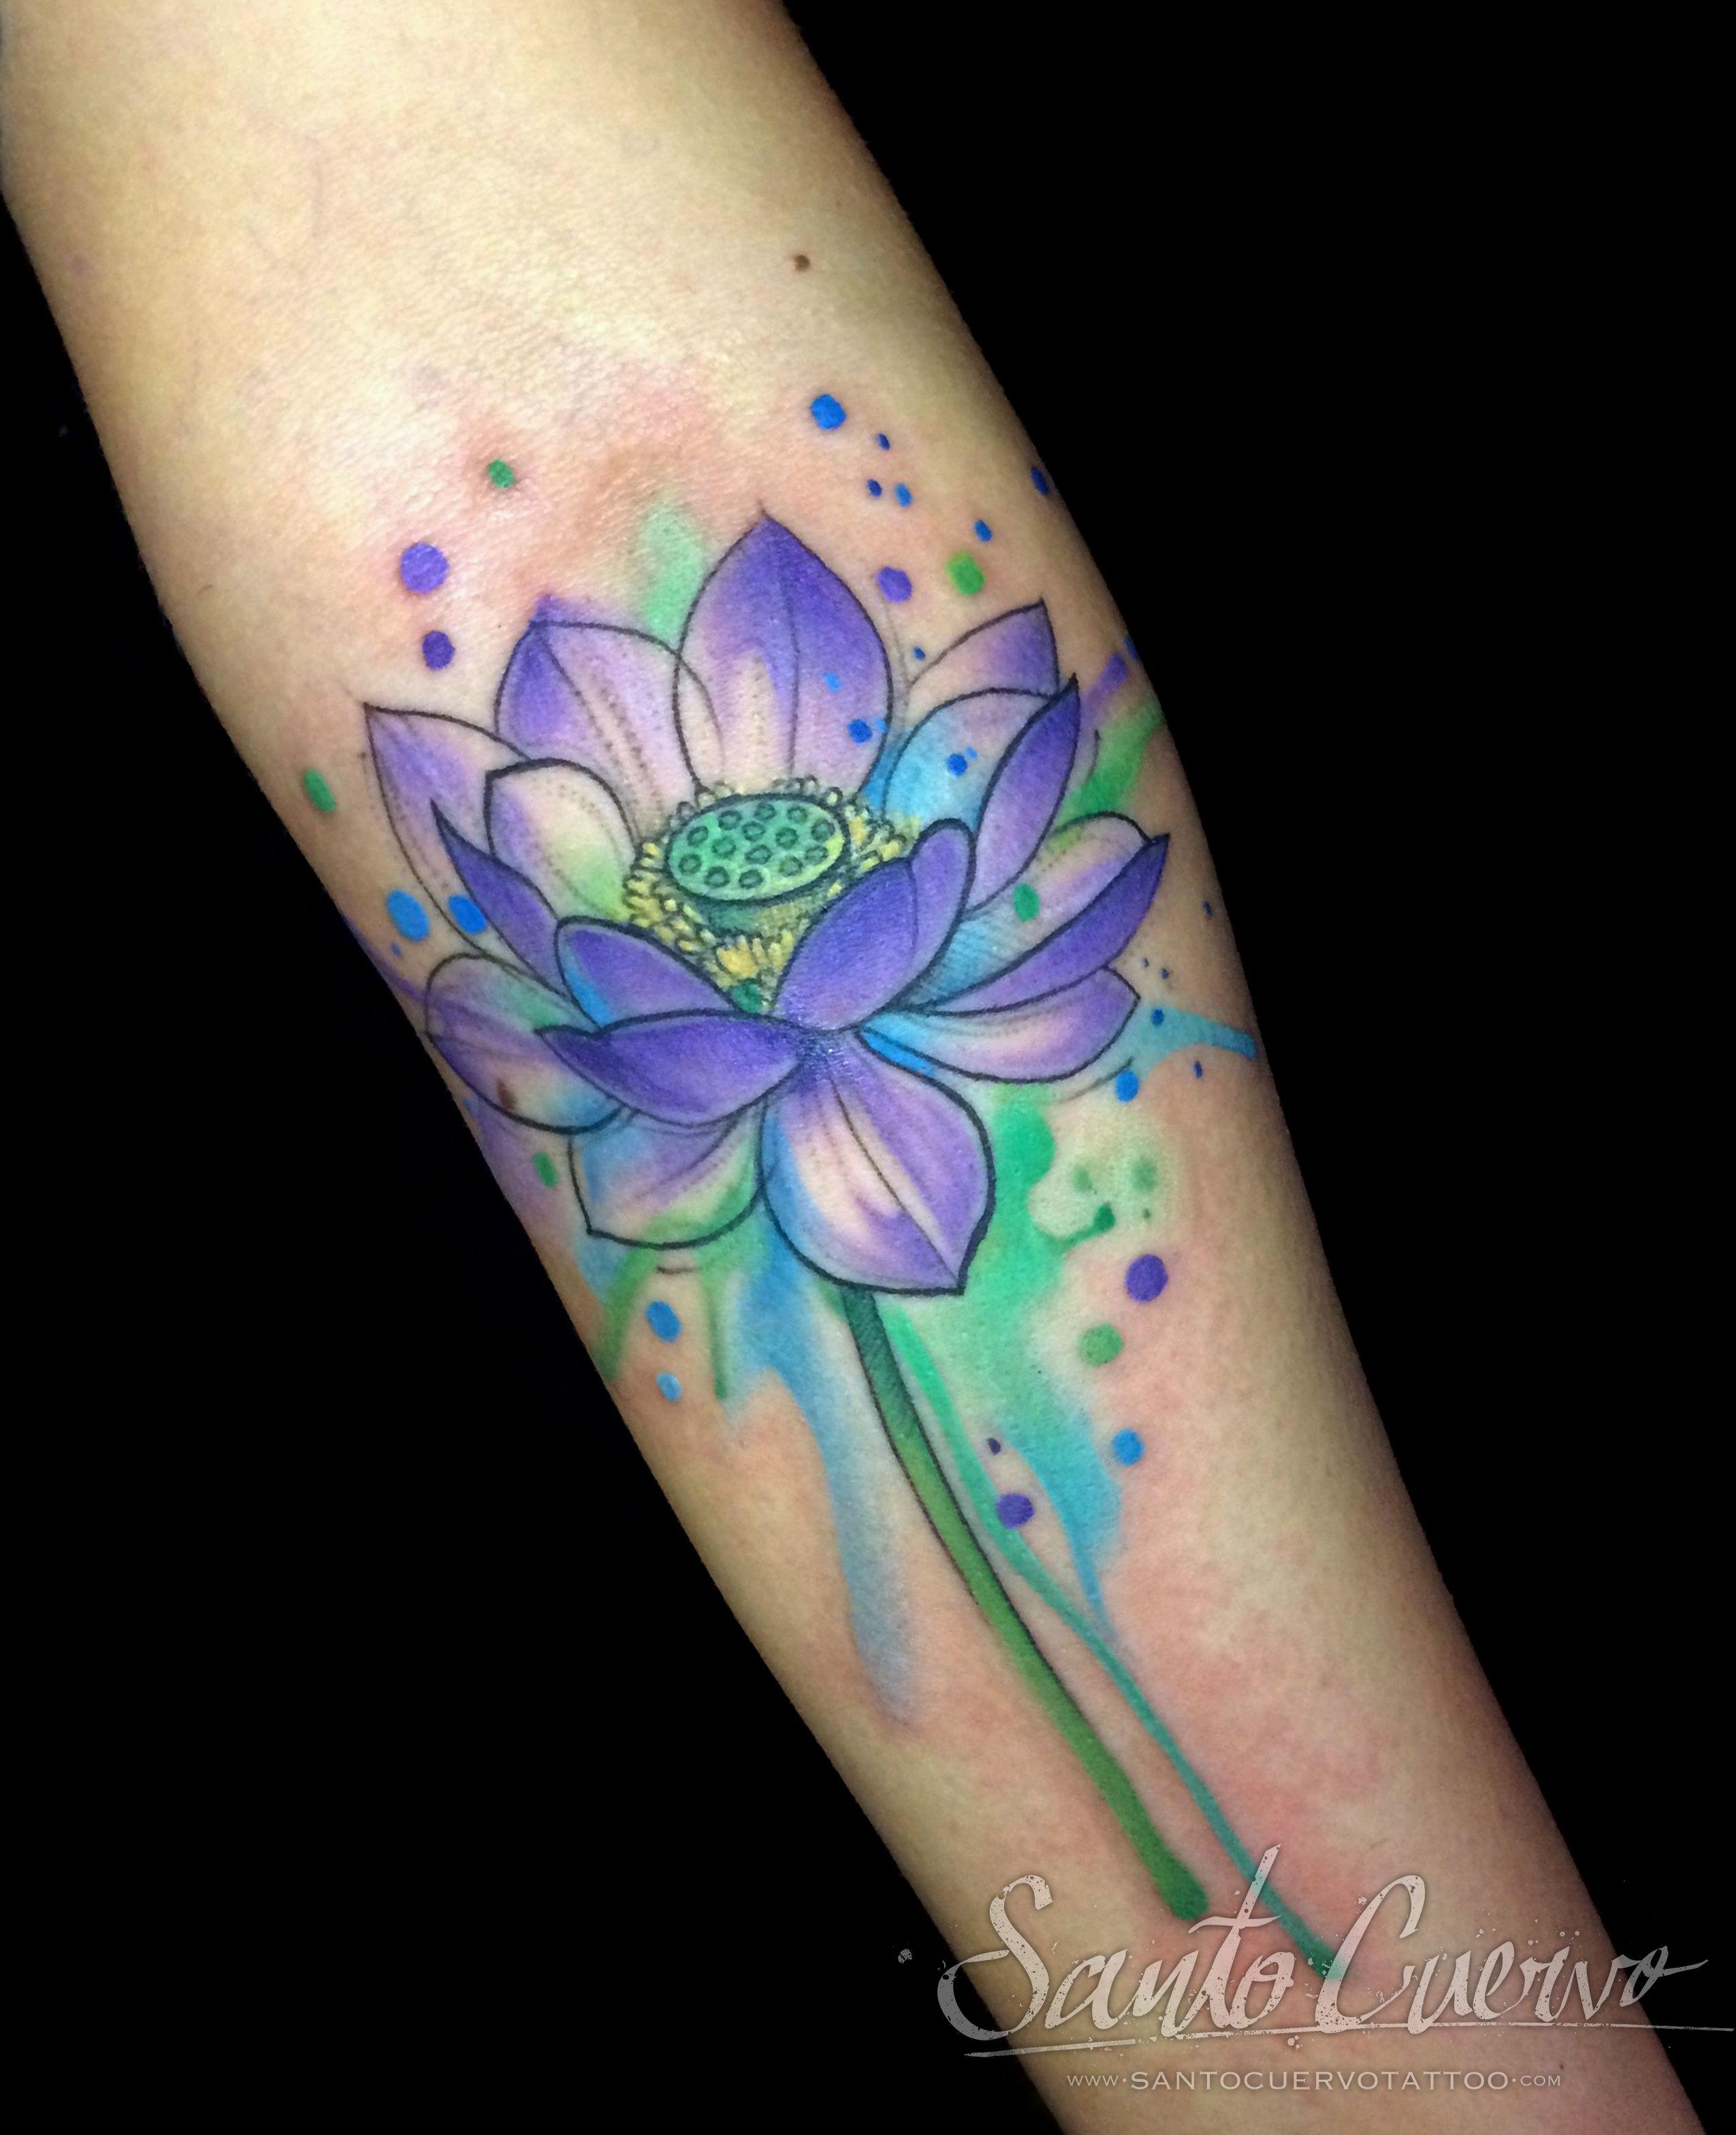 Lotus Flower Tattoo Design and Ideas - YouTube